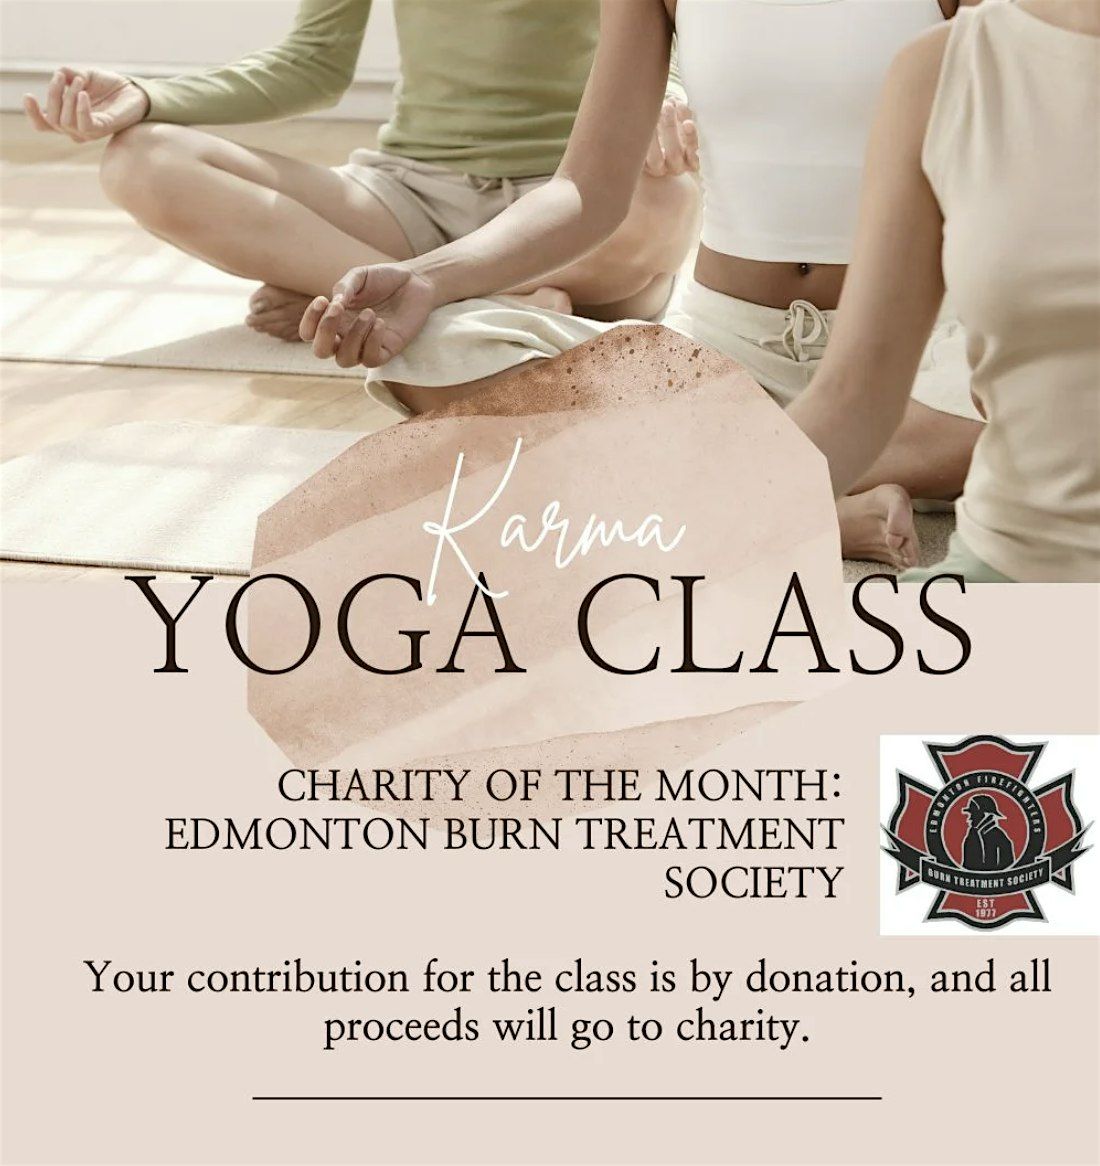 Charity Event - Karma Yoga Class